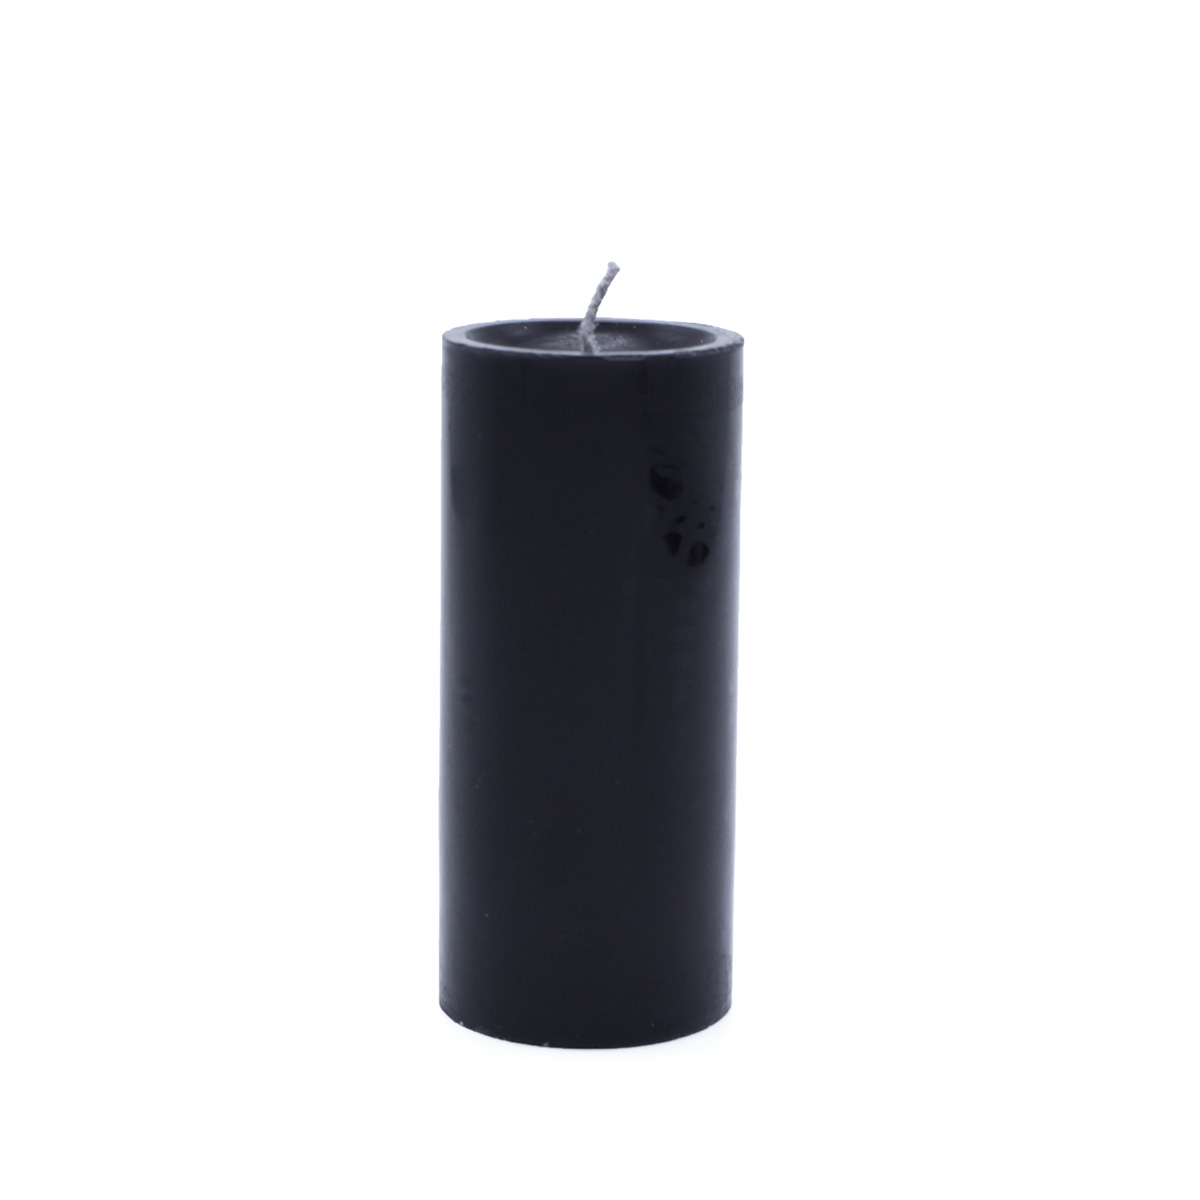 Sensual-Hot-Wax-XL-Candle-Black-OPR-2820072-1